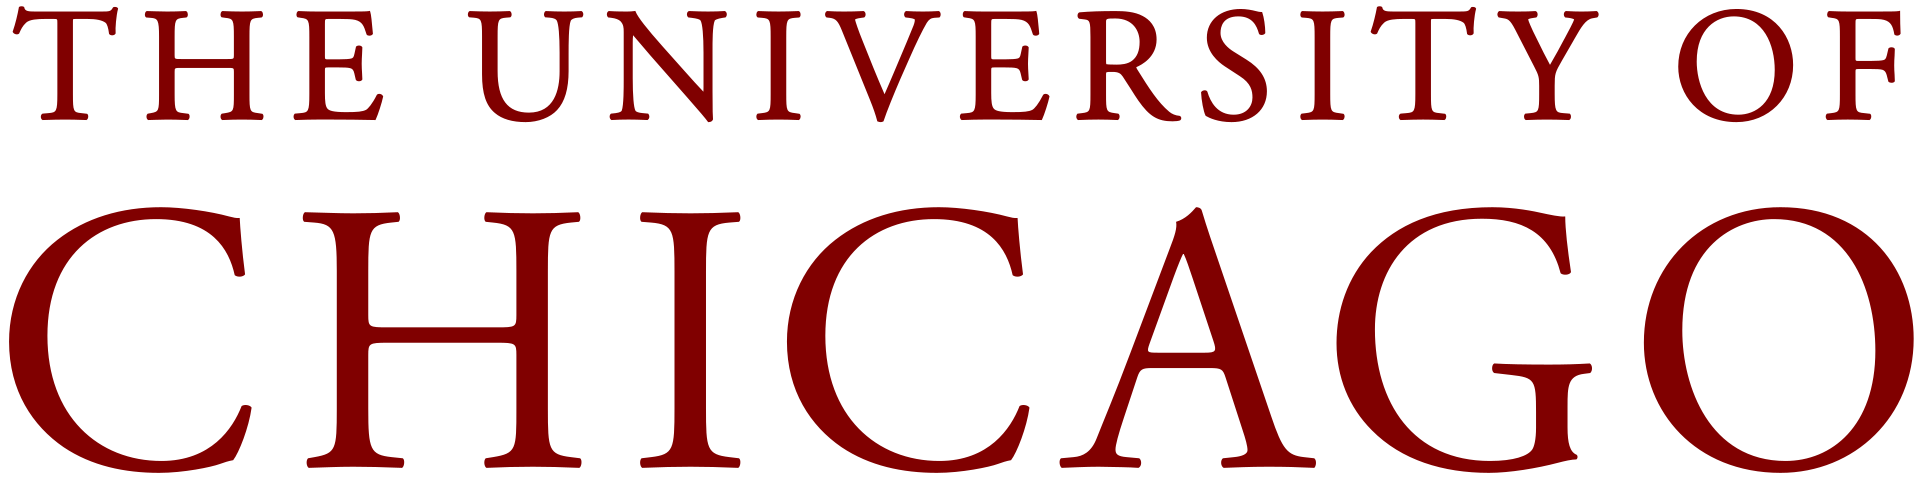 芝加哥大学 logo, By 芝加哥大学 - http://communications.uchicago.edu/sites/all/files/communications/身份/uchicago.身份.的指导方针.pdf，公共领域，http://commons.维基.org/w/index.php?curid = 66222713 "